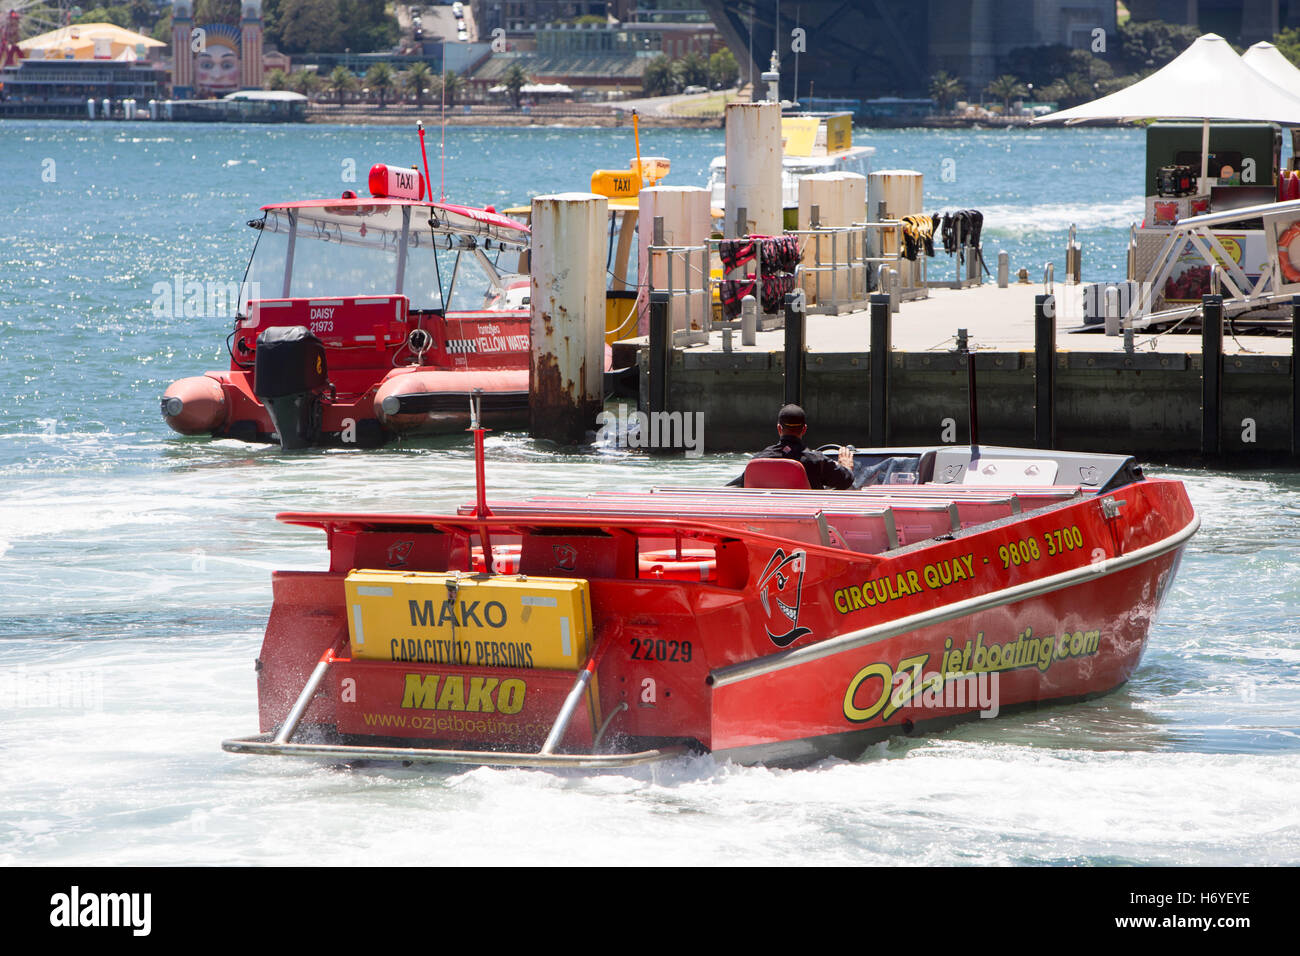 Oz jet speed jetboating on Sydney harbour at circular quay,Sydney,Australia Stock Photo